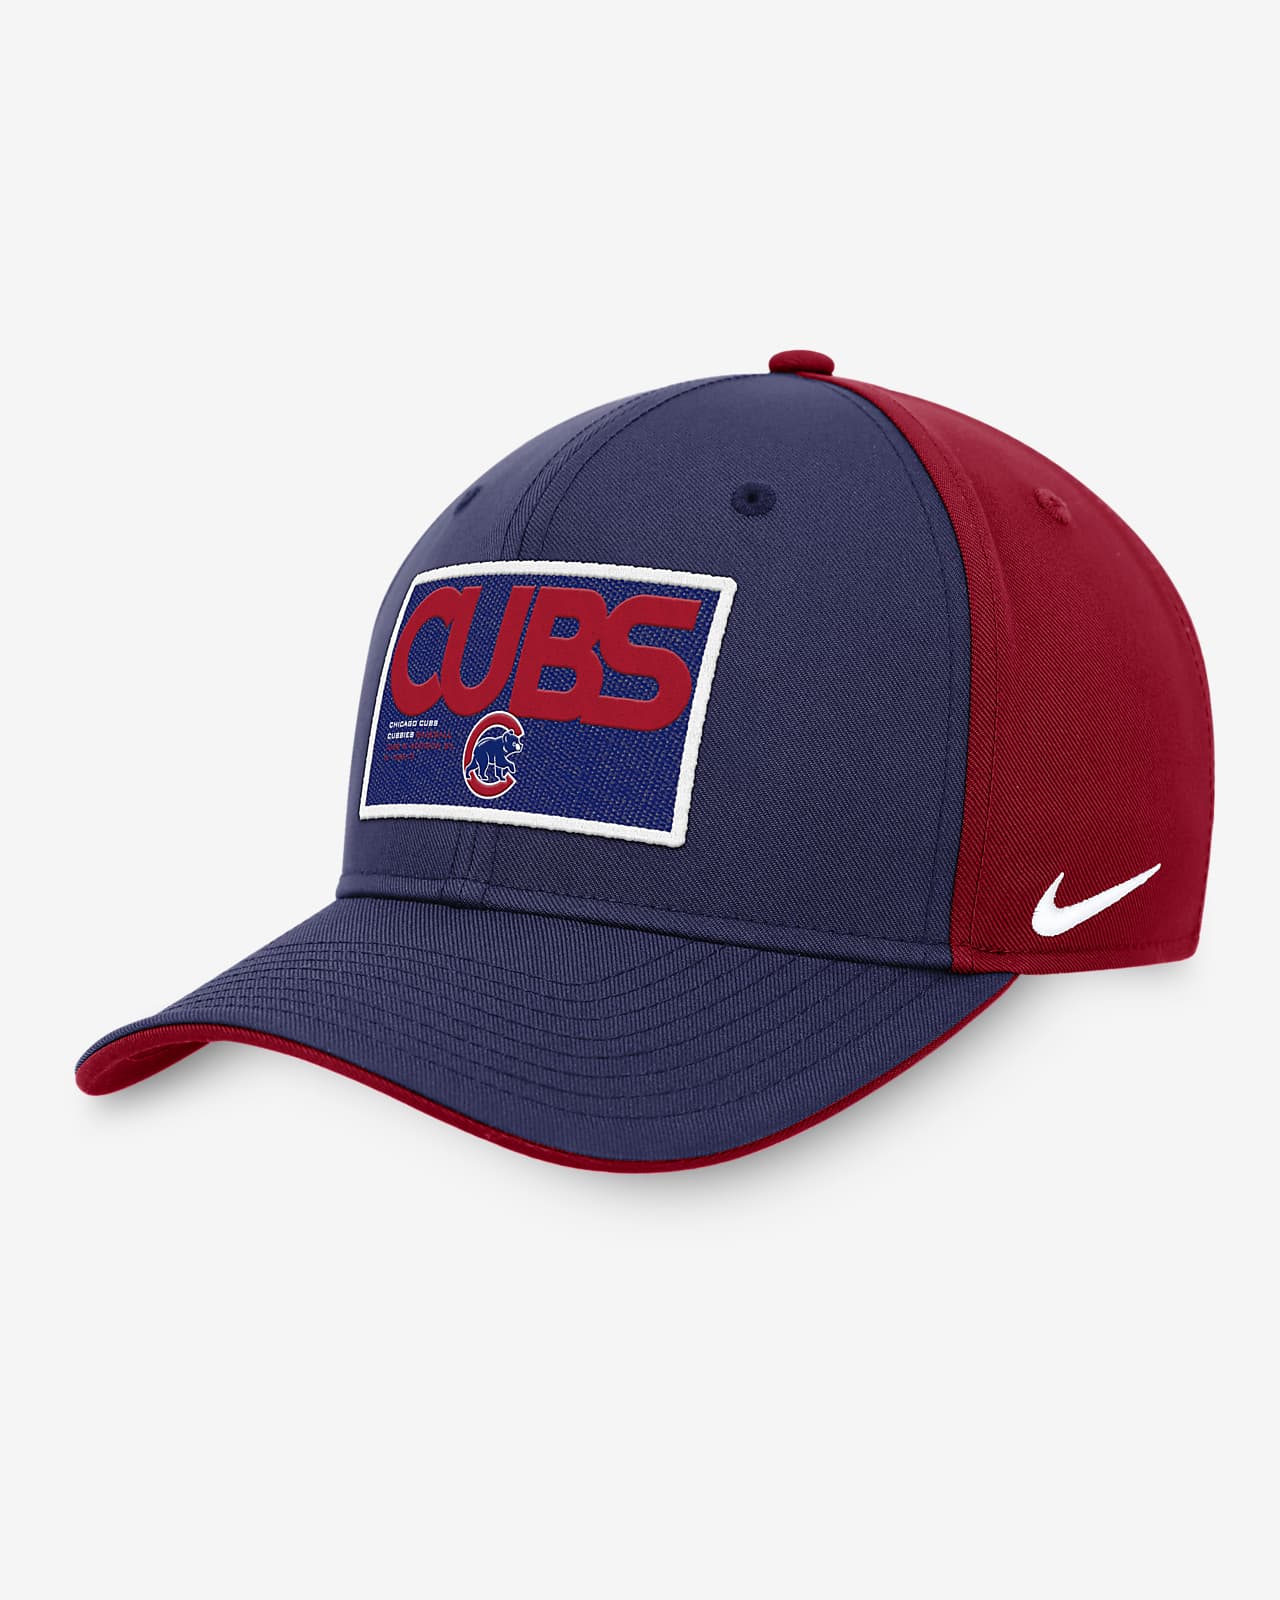 Chicago Cubs Classic99 Color Block Men's Nike MLB Adjustable Hat.